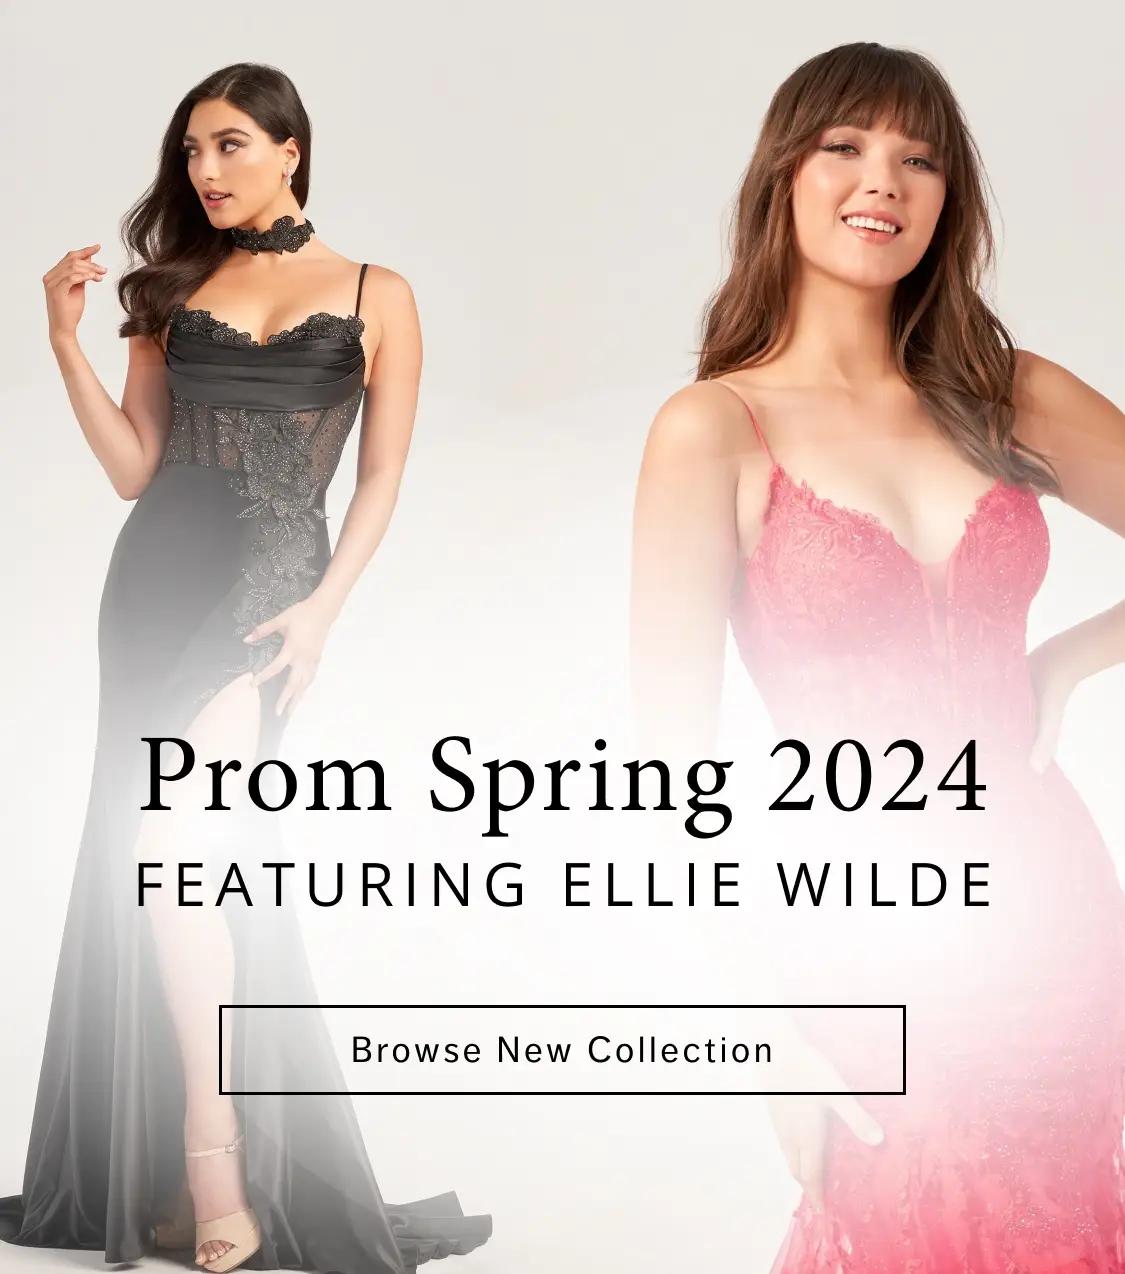 Ellie Wilde prom banner mobile